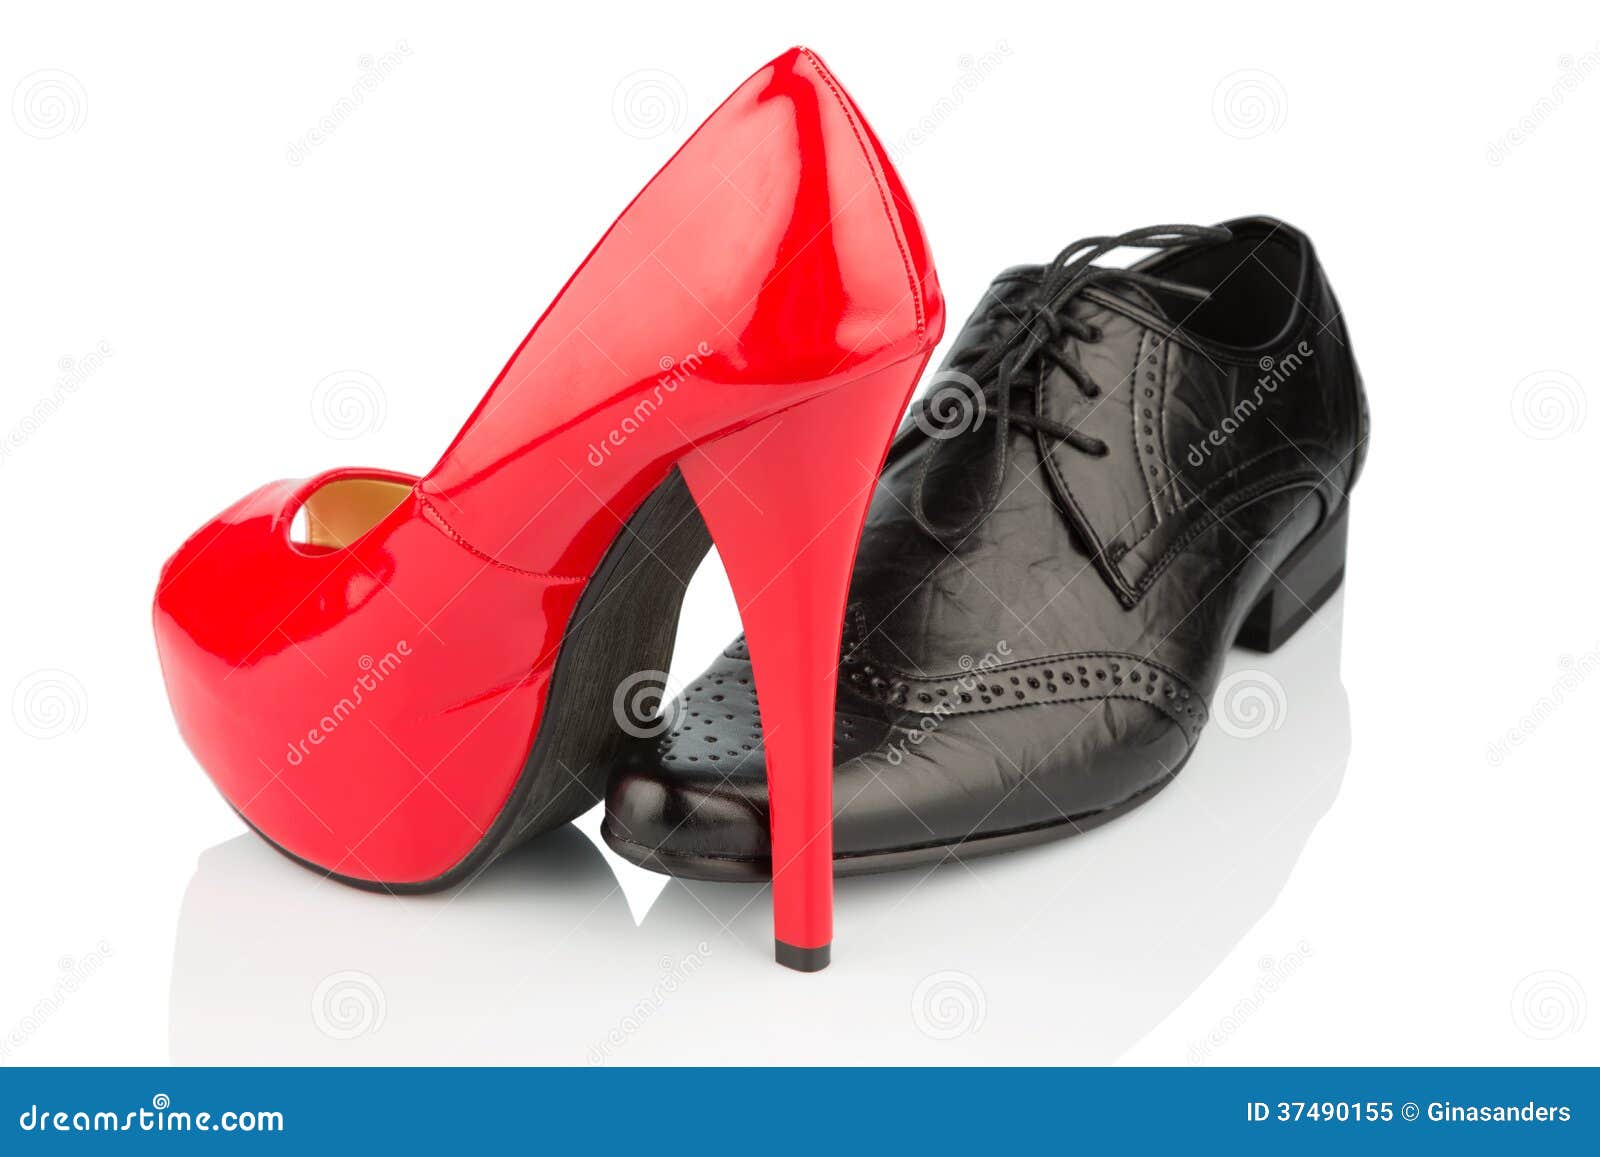 s ladies shoes